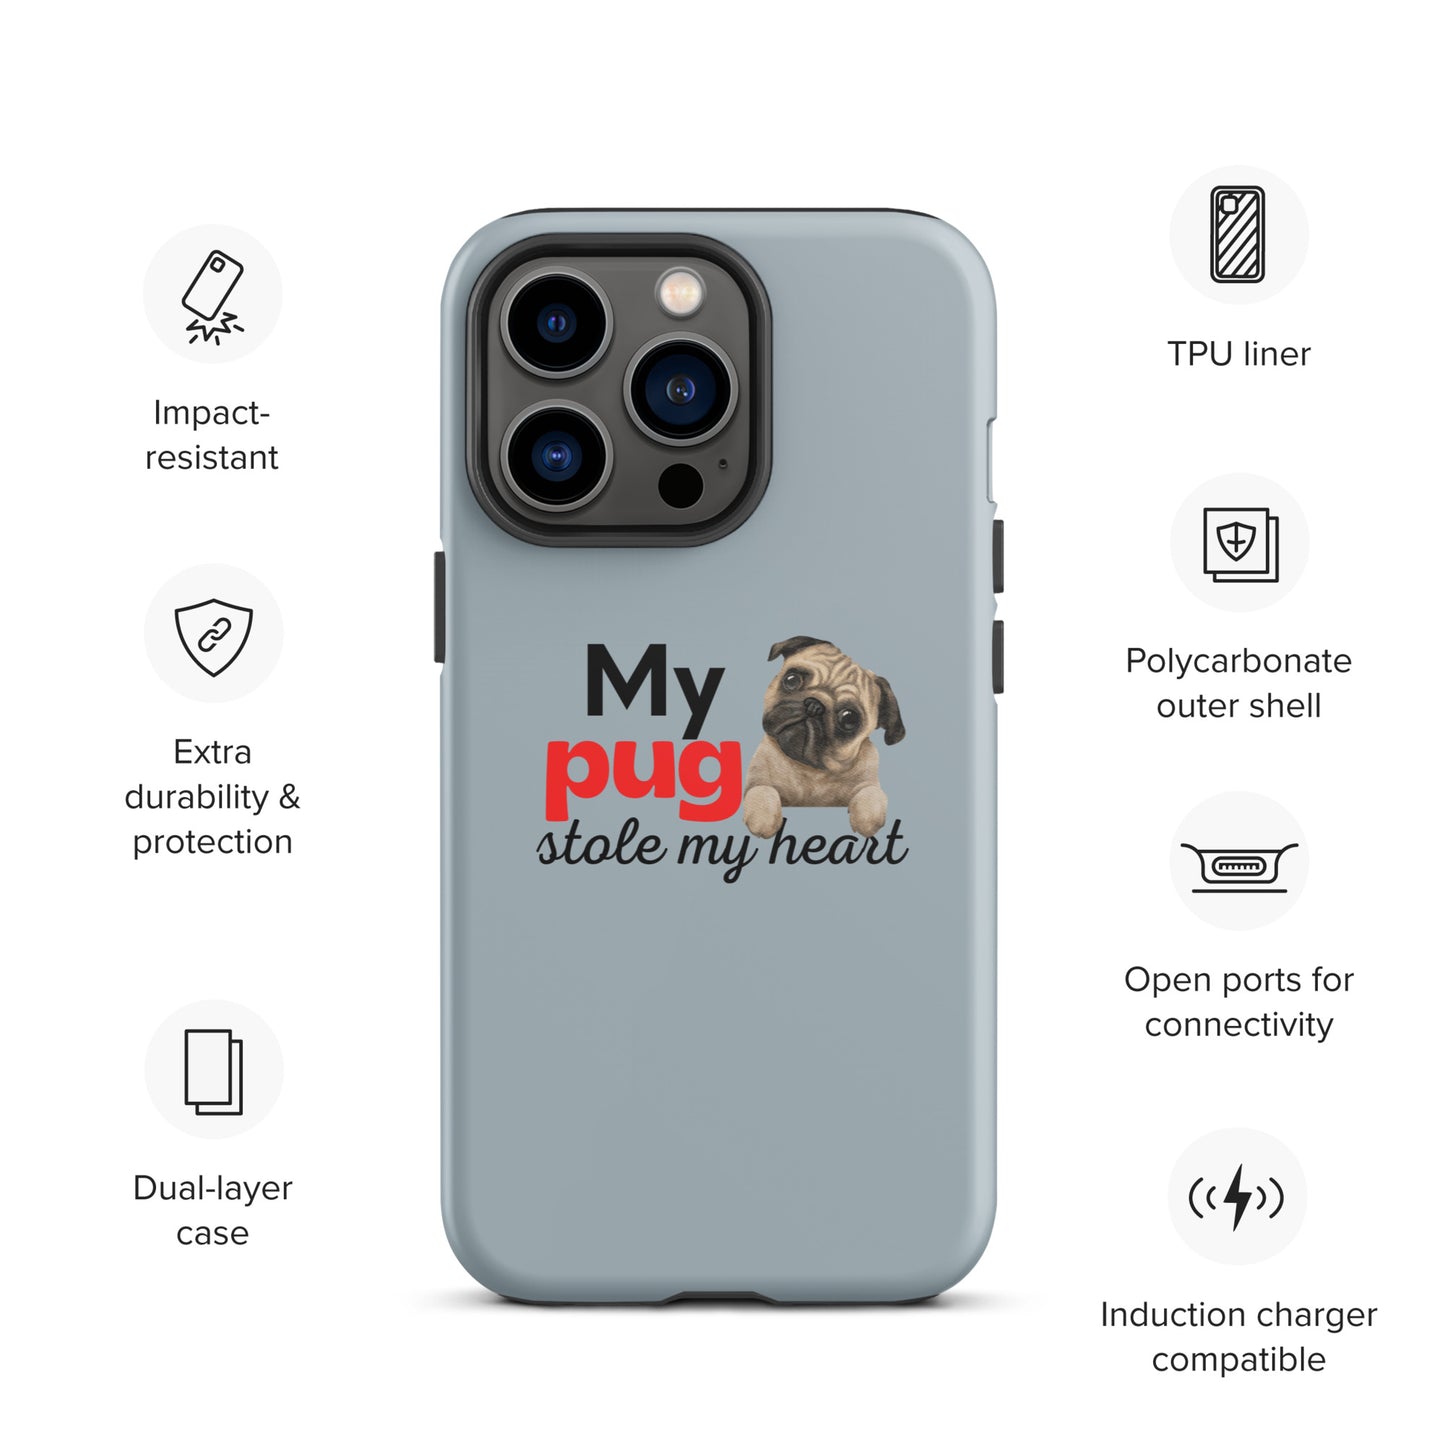 iPhone Case 'My Pug stole my heart' Grey